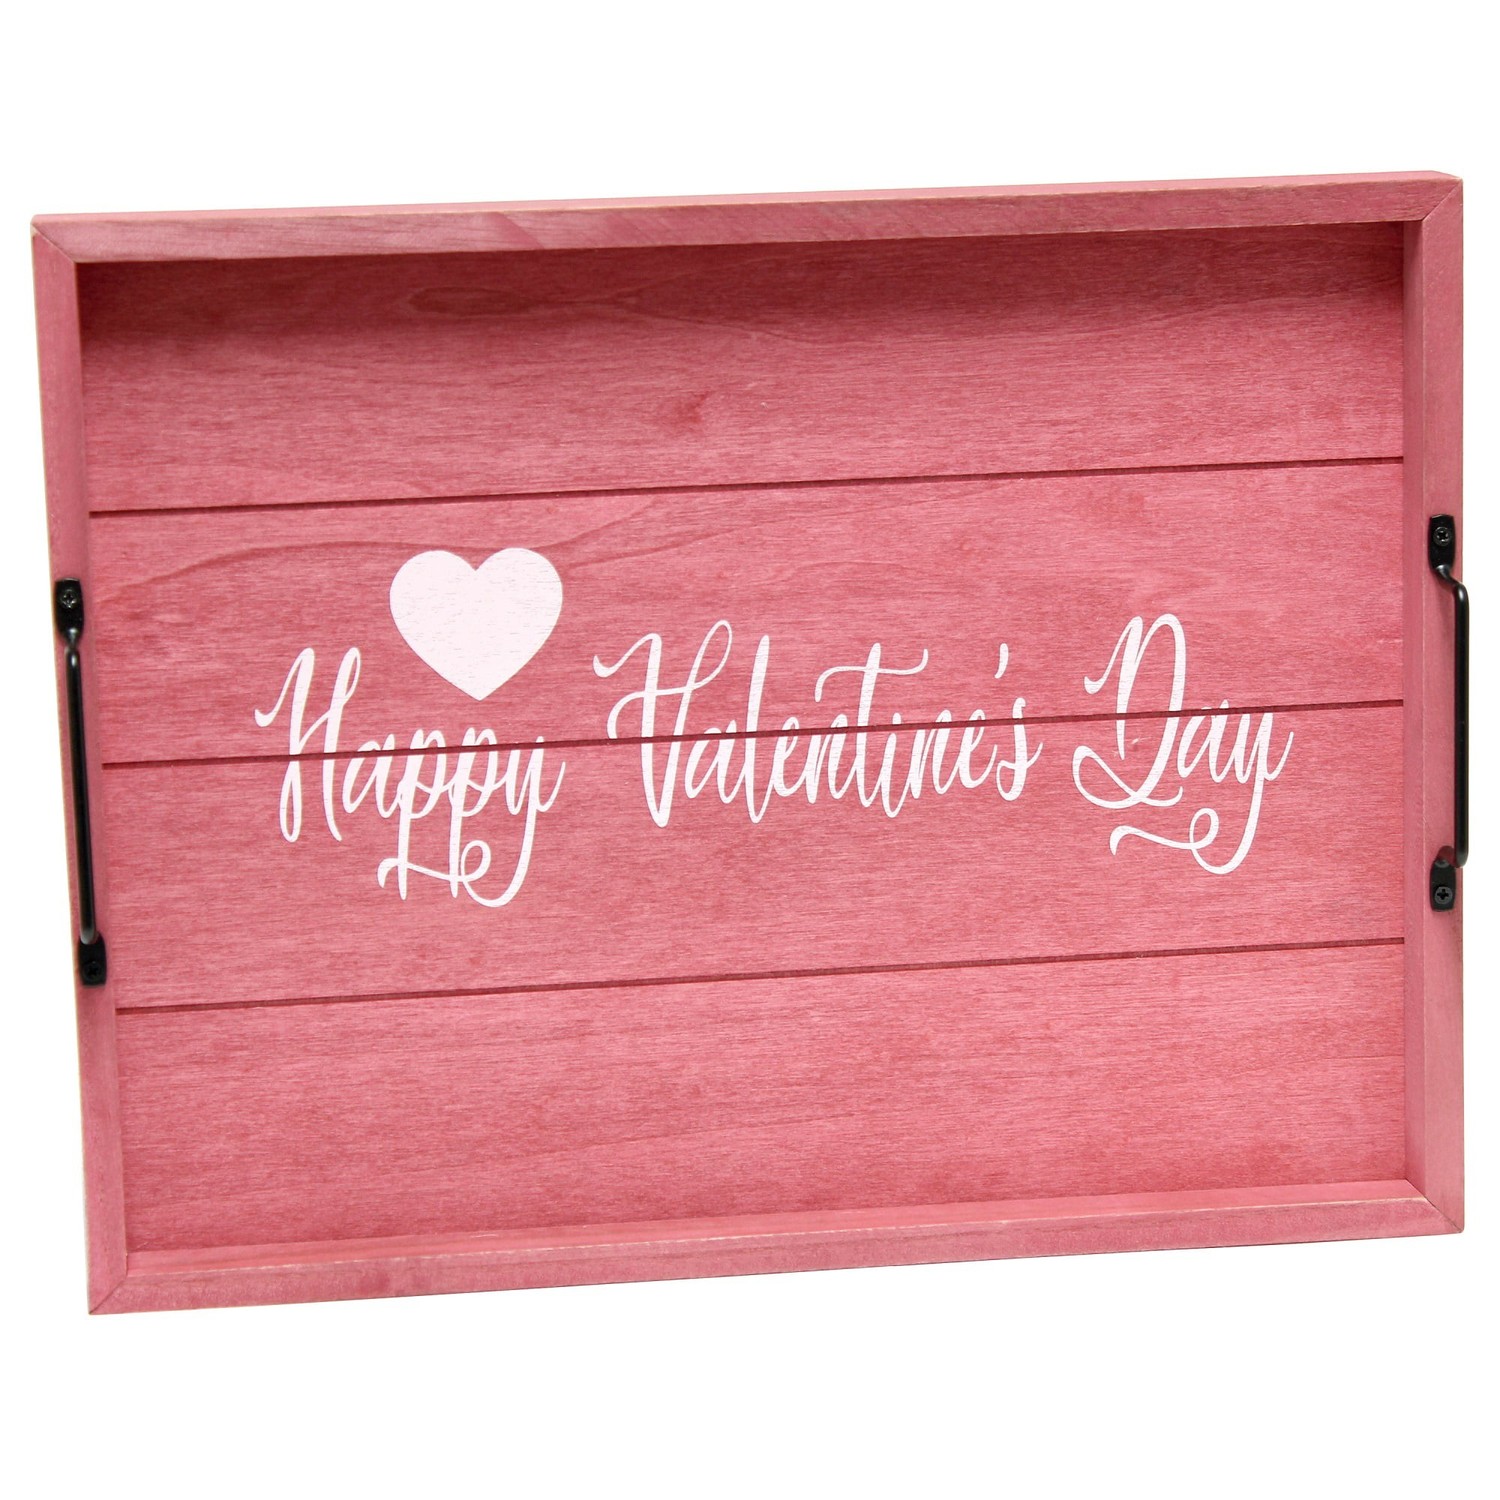 Elegant Designs Decorative Wood Serving Tray w/ Handles, 15.50" x 12", "Happy Valentine's Day"